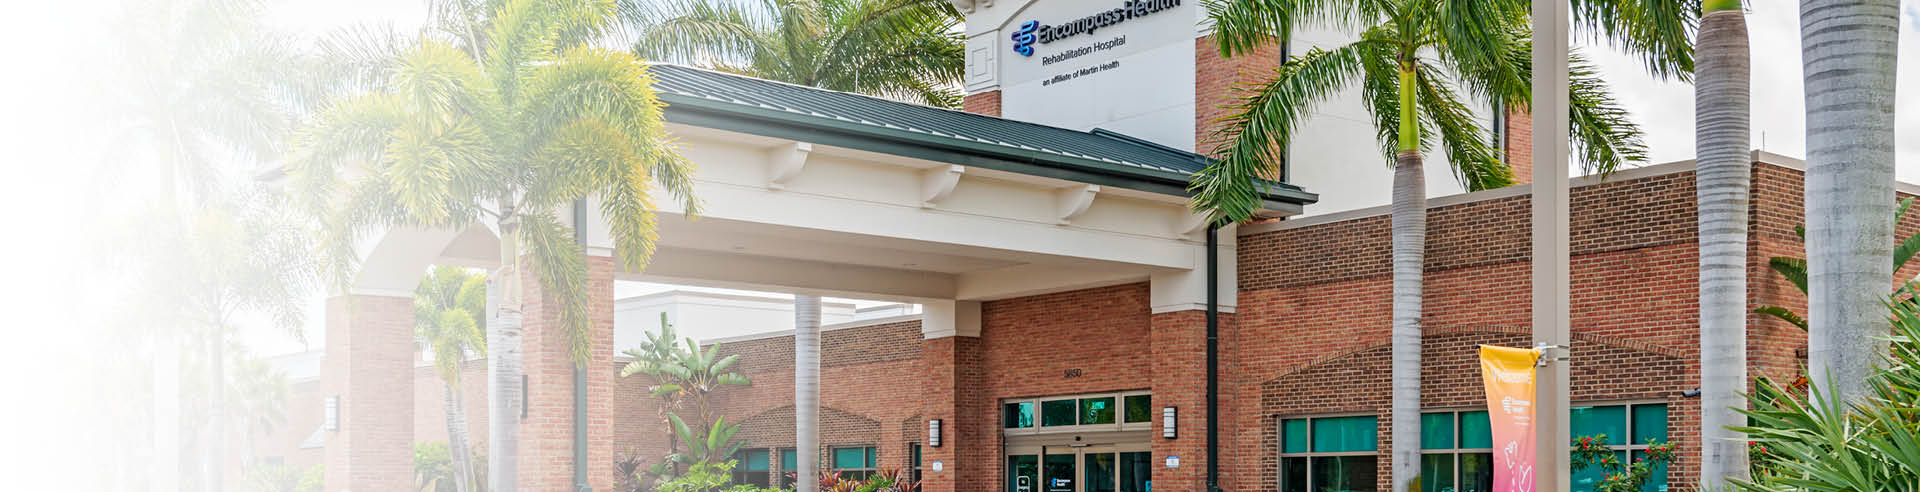 Encompass Health Rehabilitation Hospital, an affiliate of Martin Health exterior shot